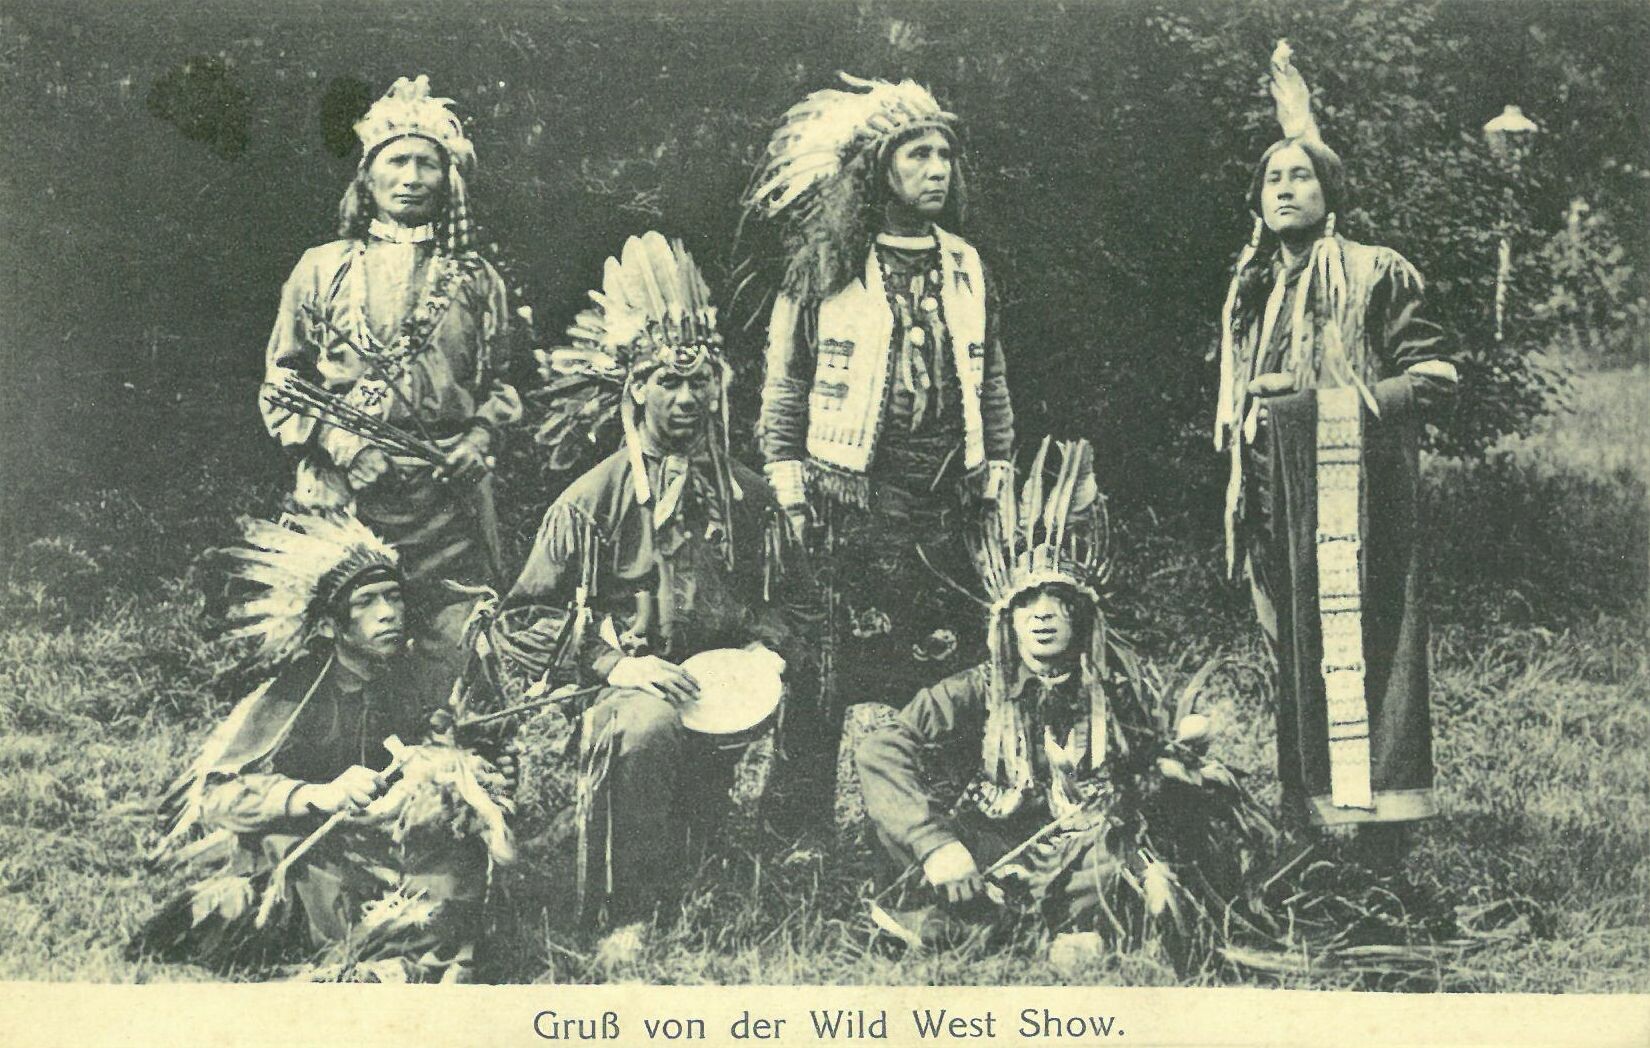 Wild West Show der Deer Family; Gruppenbild 6 Männer in indigener Kleidung (Karl-May-Museum gGmbH RR-R)